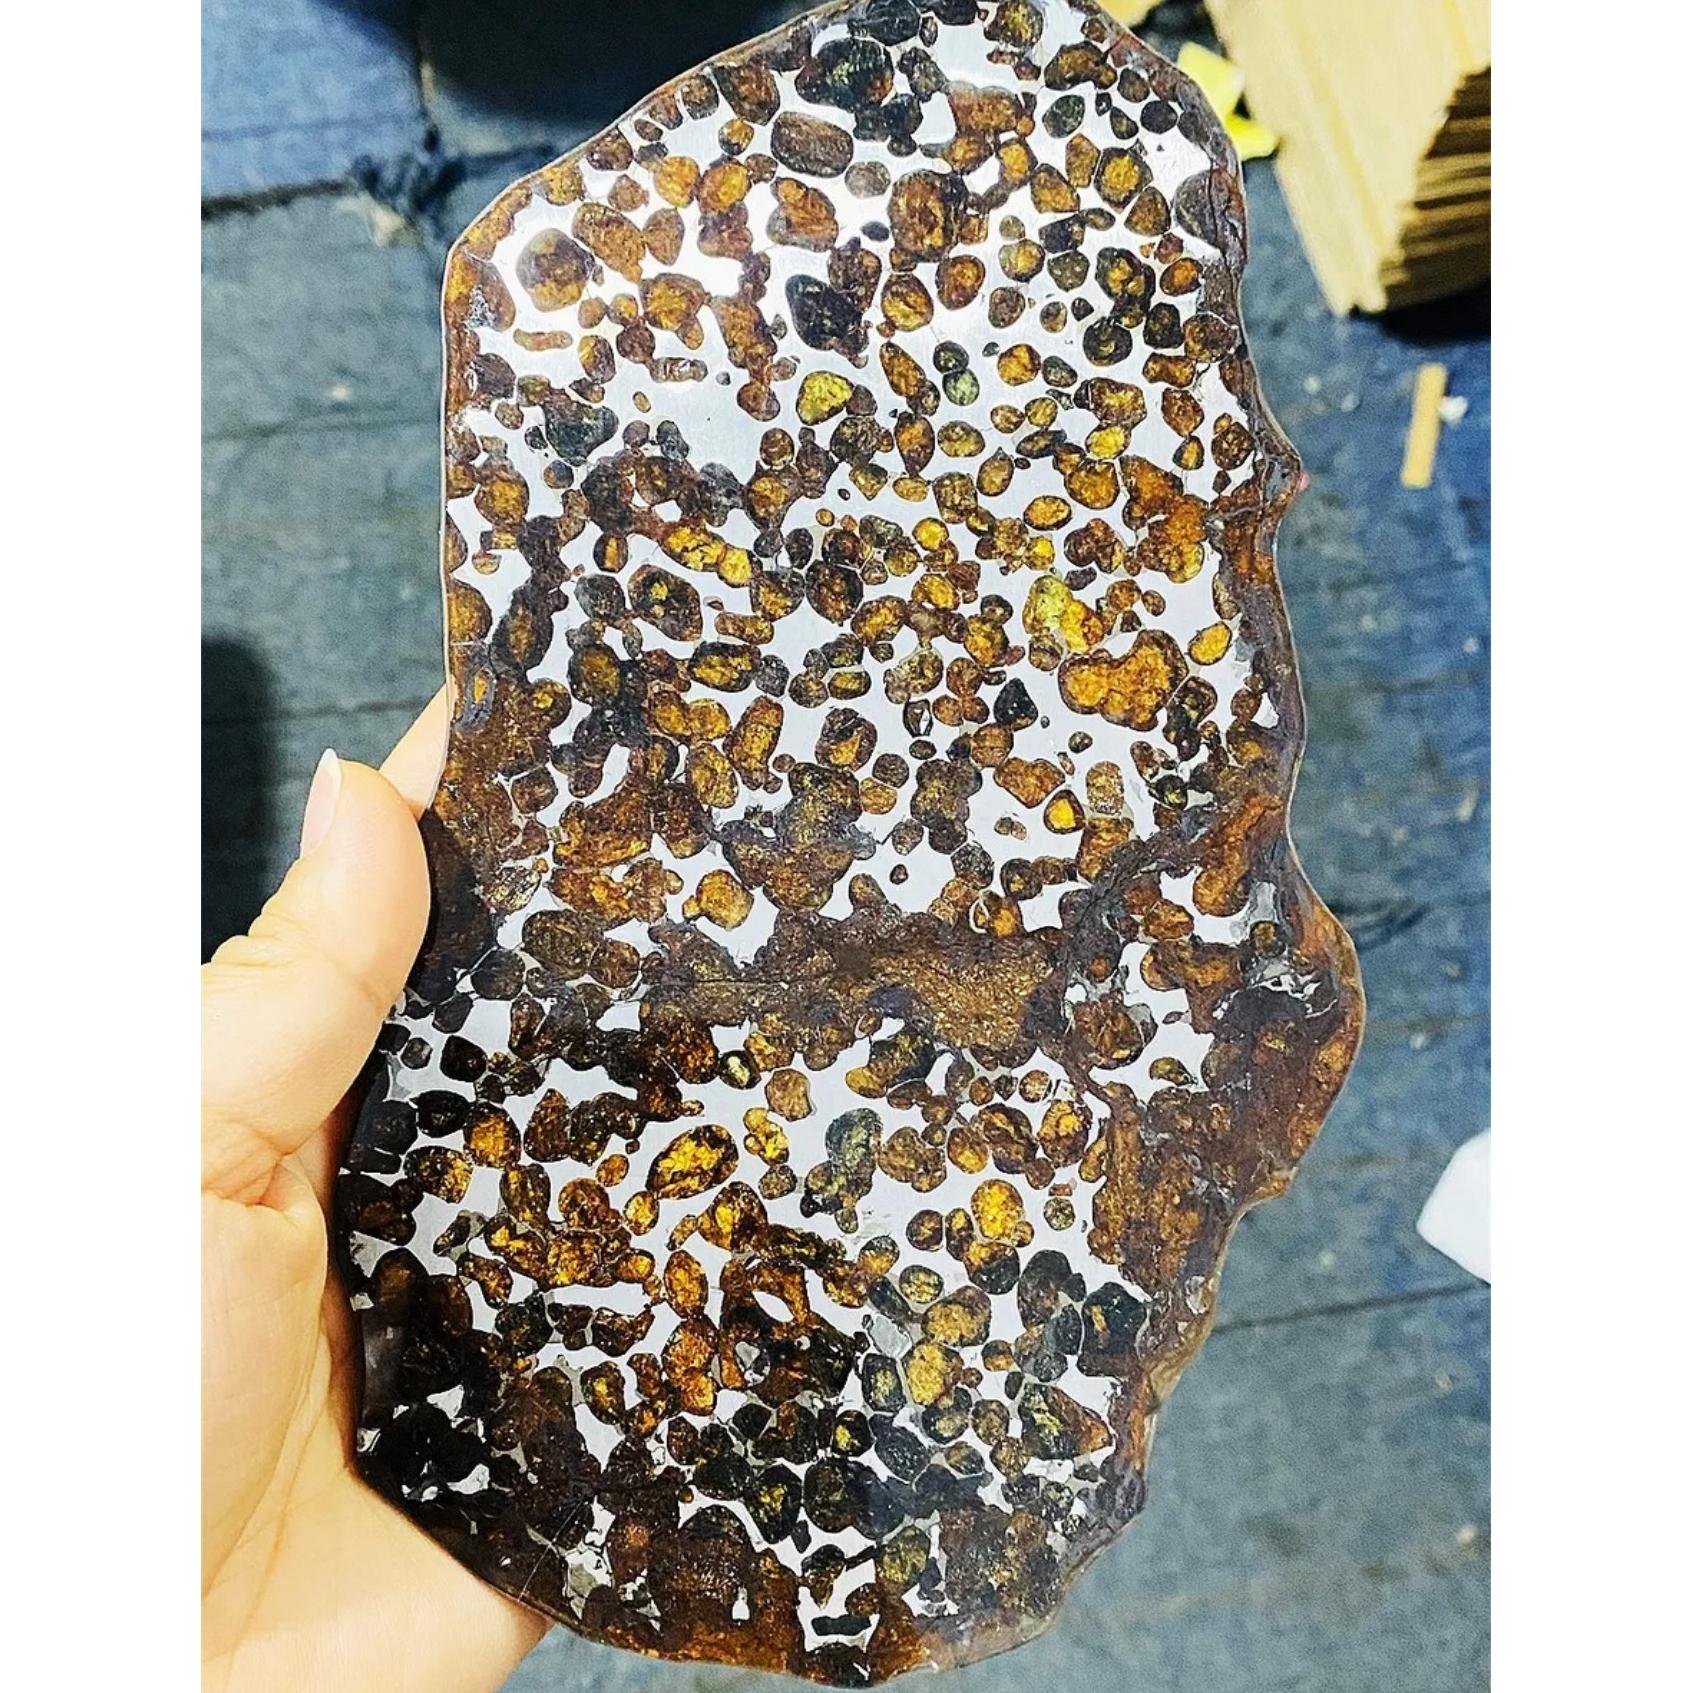 Stony Iron Pallasite meteorite, Sericho Prehistoric Online